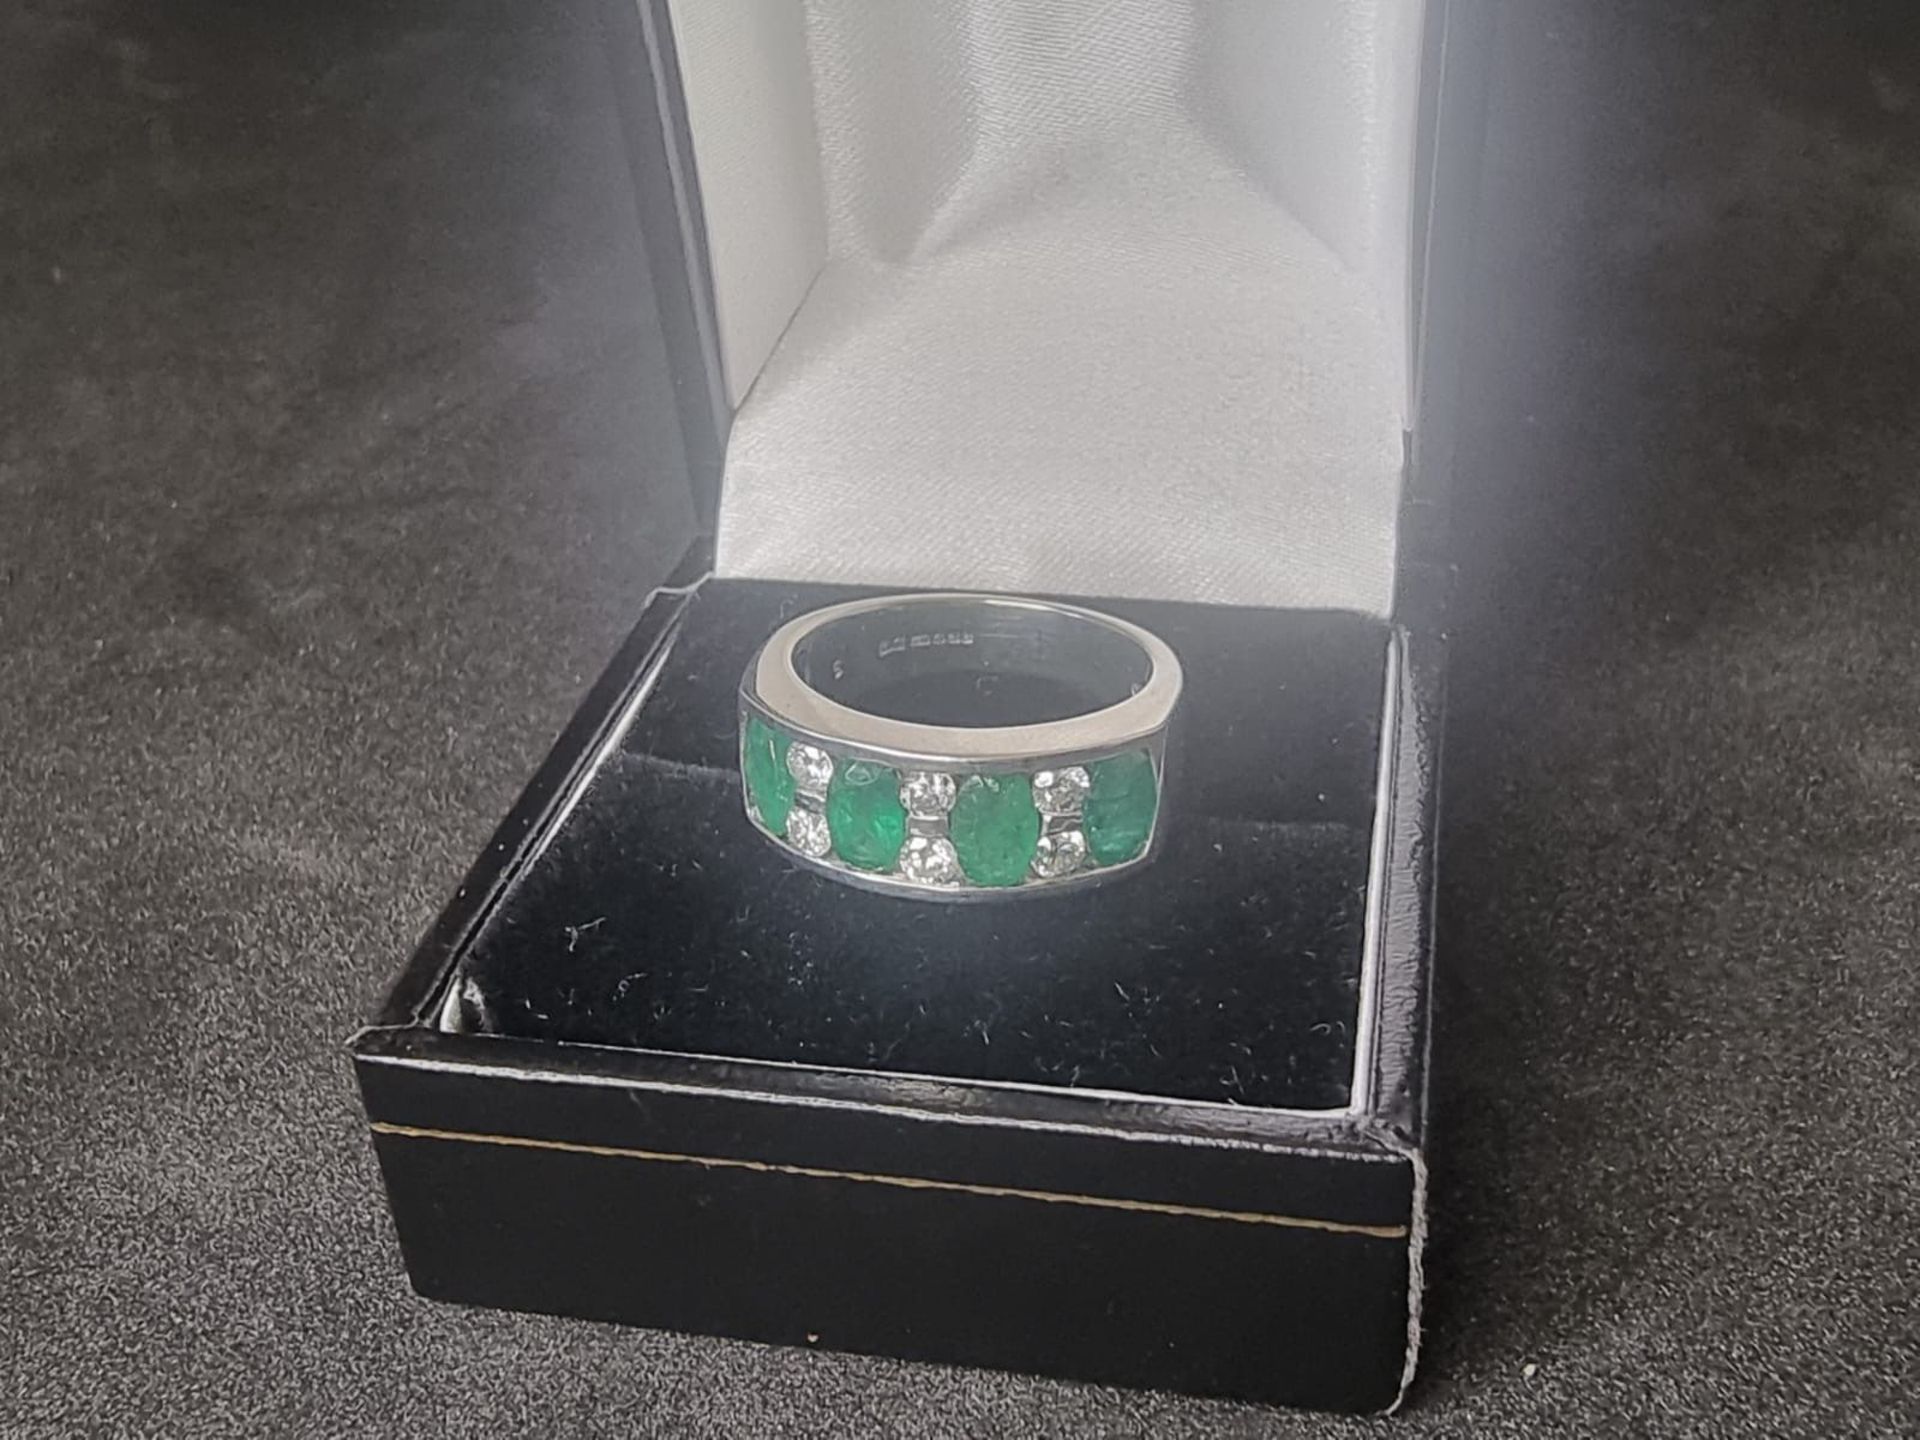 Elegant 18 Carat White Gold Ring with Diamonds & Green Stones - Image 3 of 3